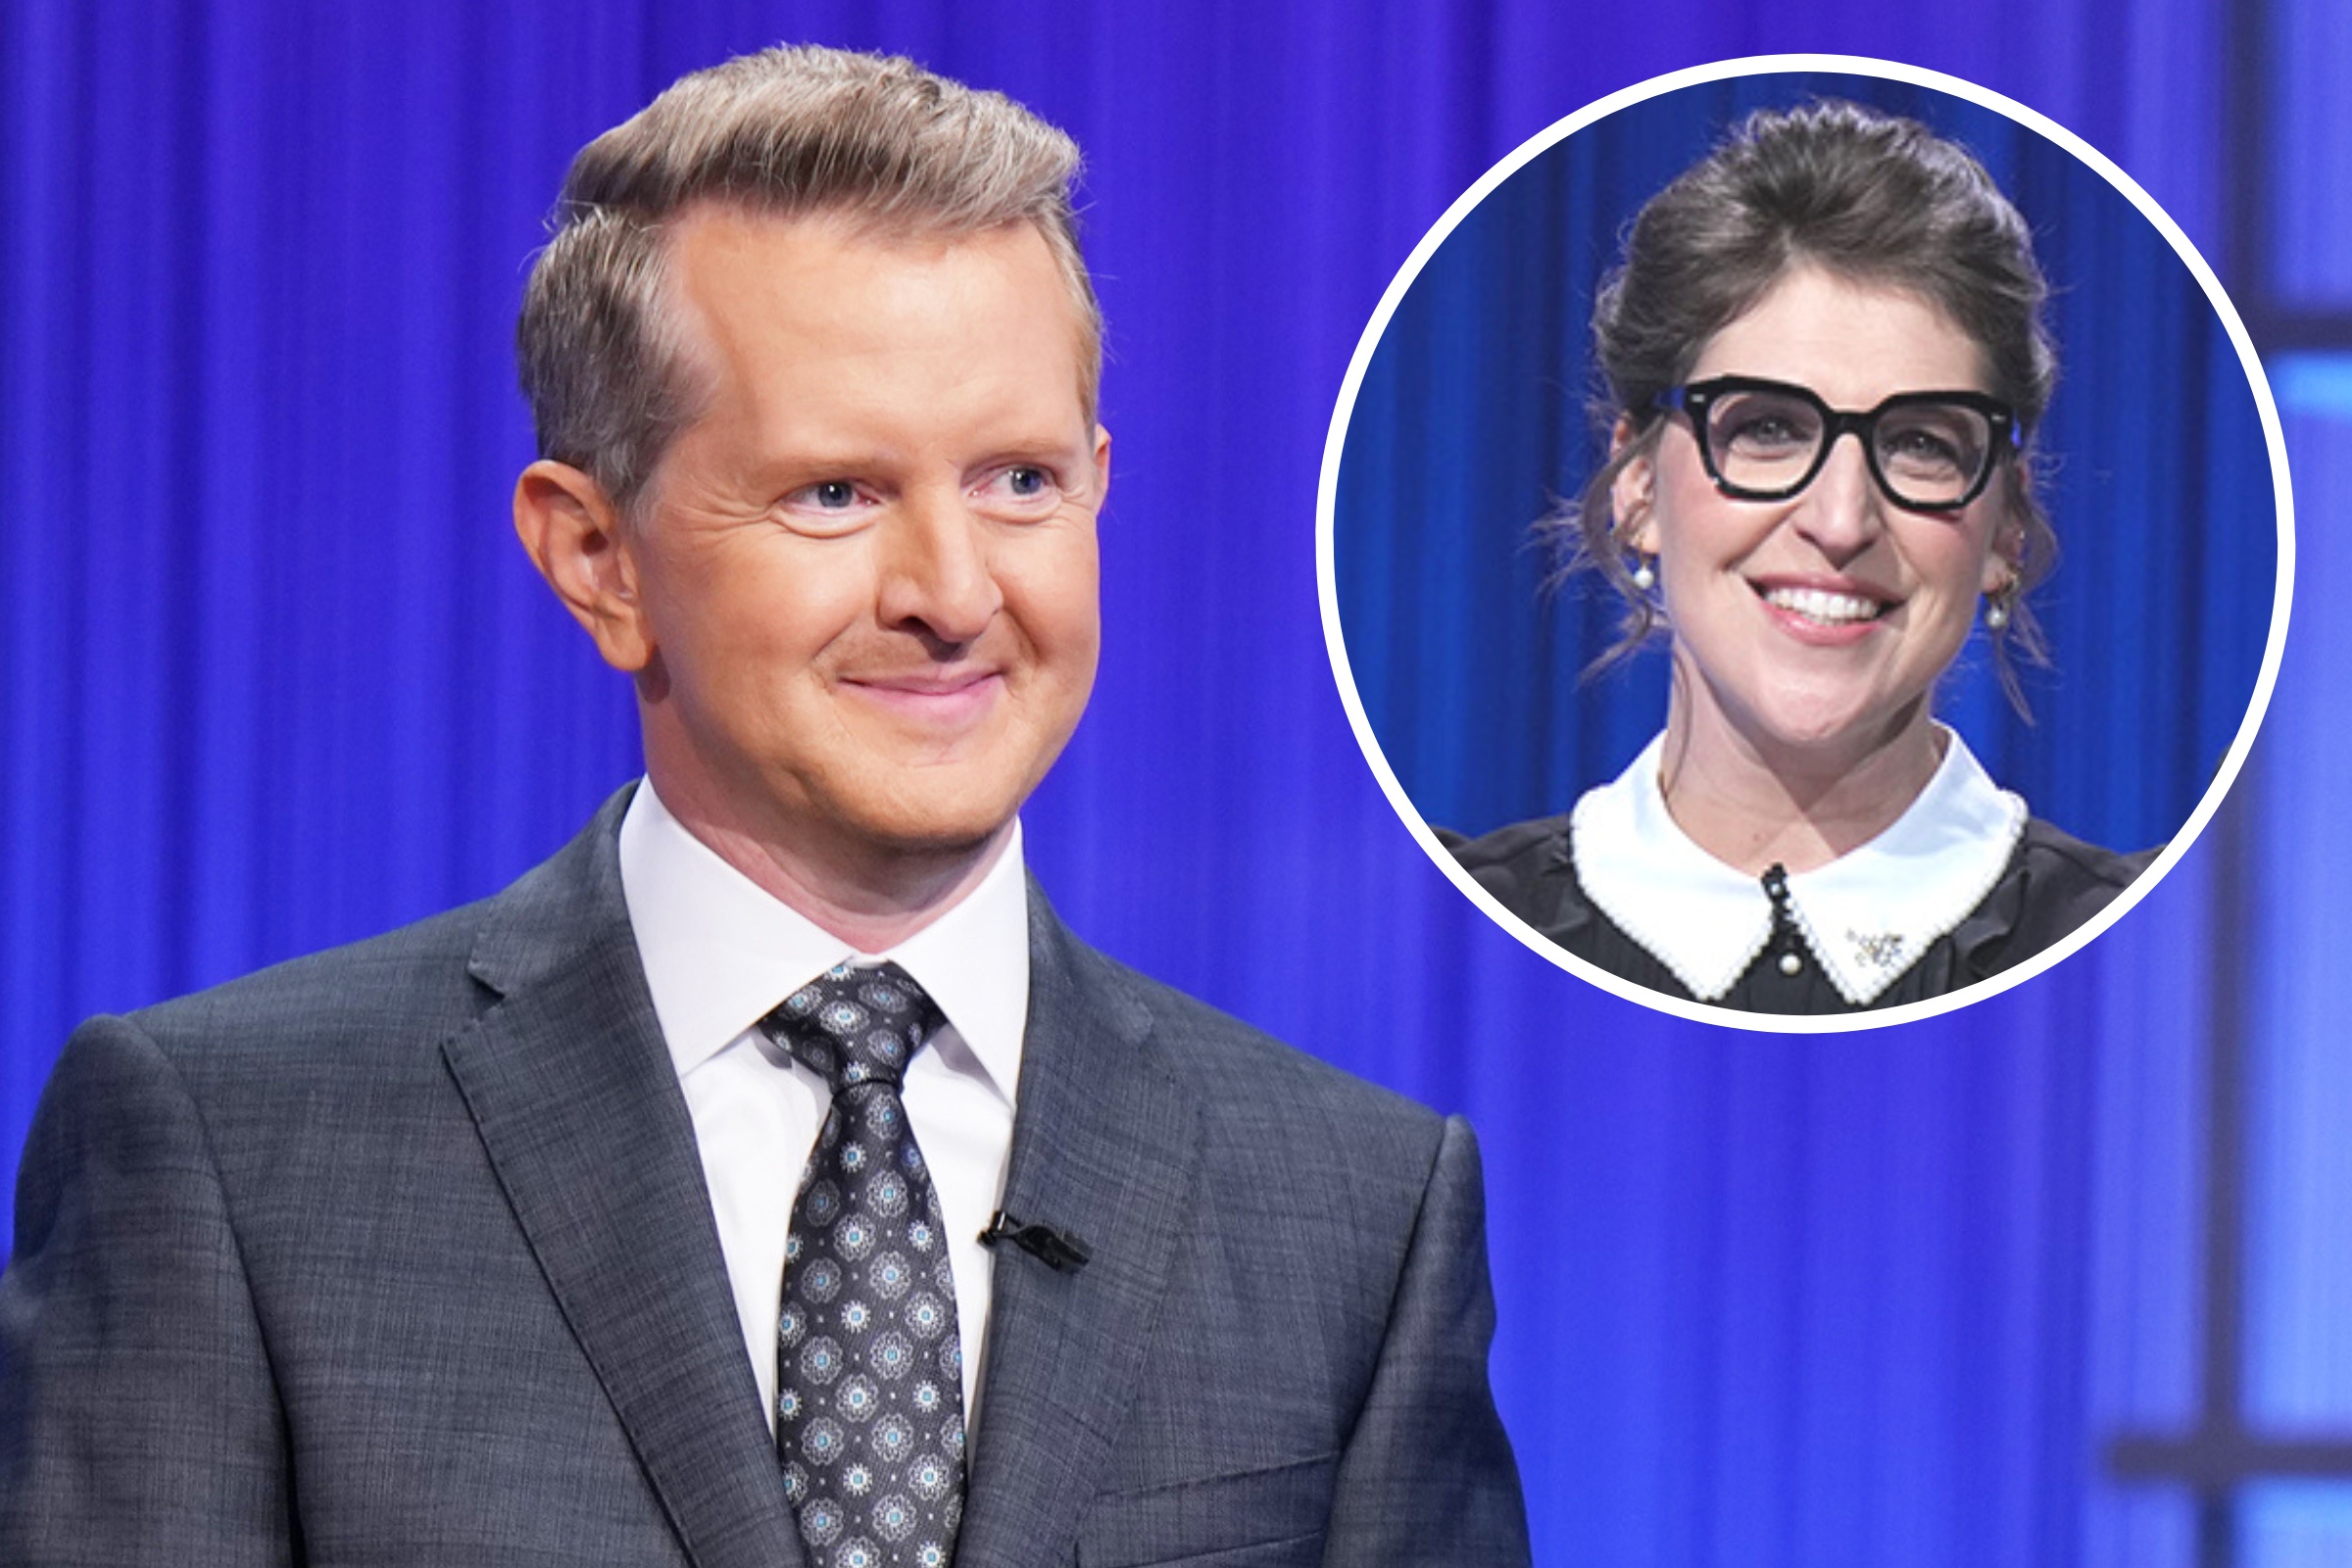 Ken Jennings Jokes About Mayim Bialik While Hosting ‘Jeopardy!’